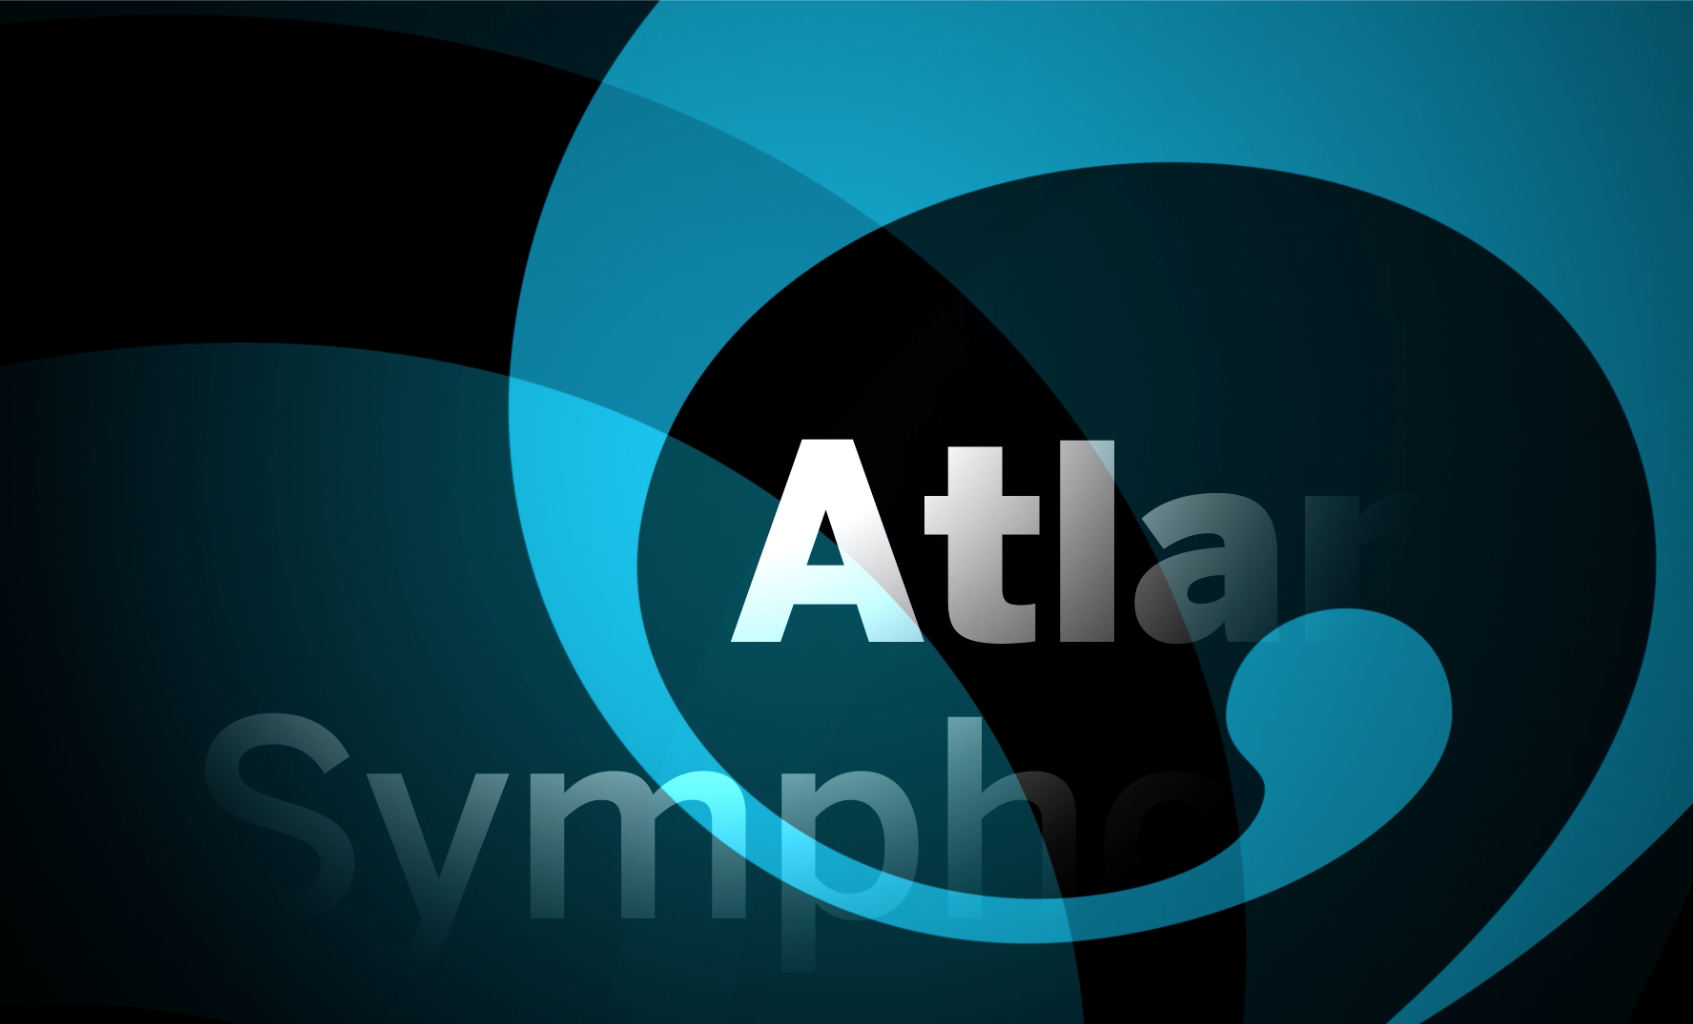 Elevating the Atlanta Symphony Brand